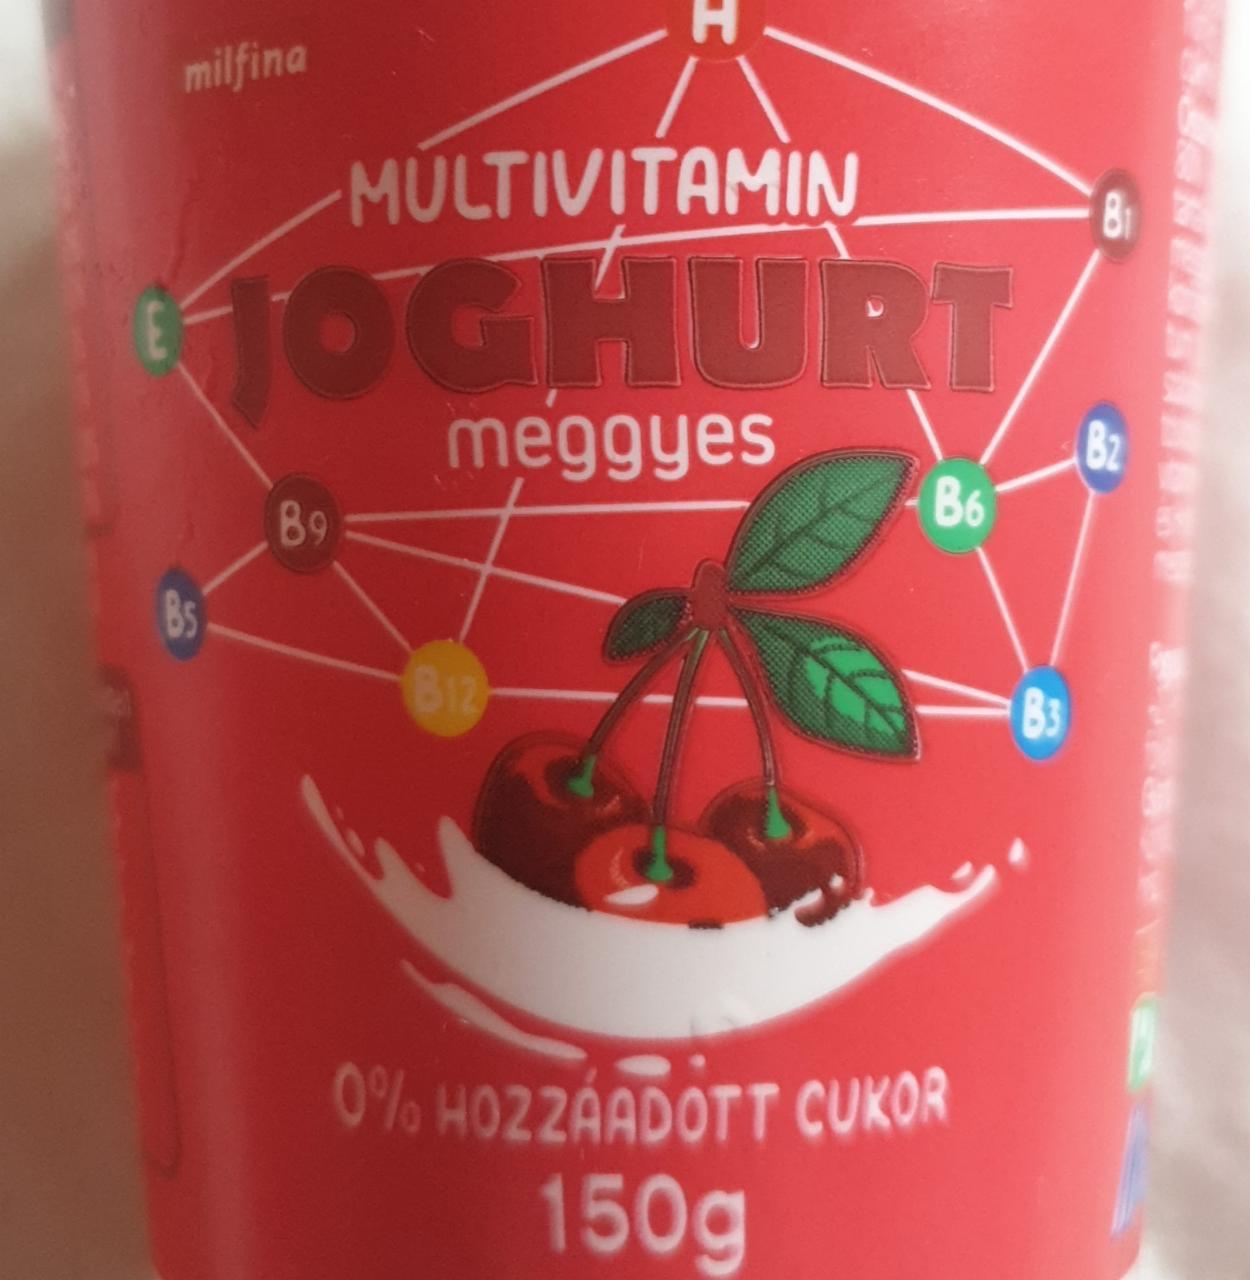 Képek - Multivitamin joghurt meggyes Milfina